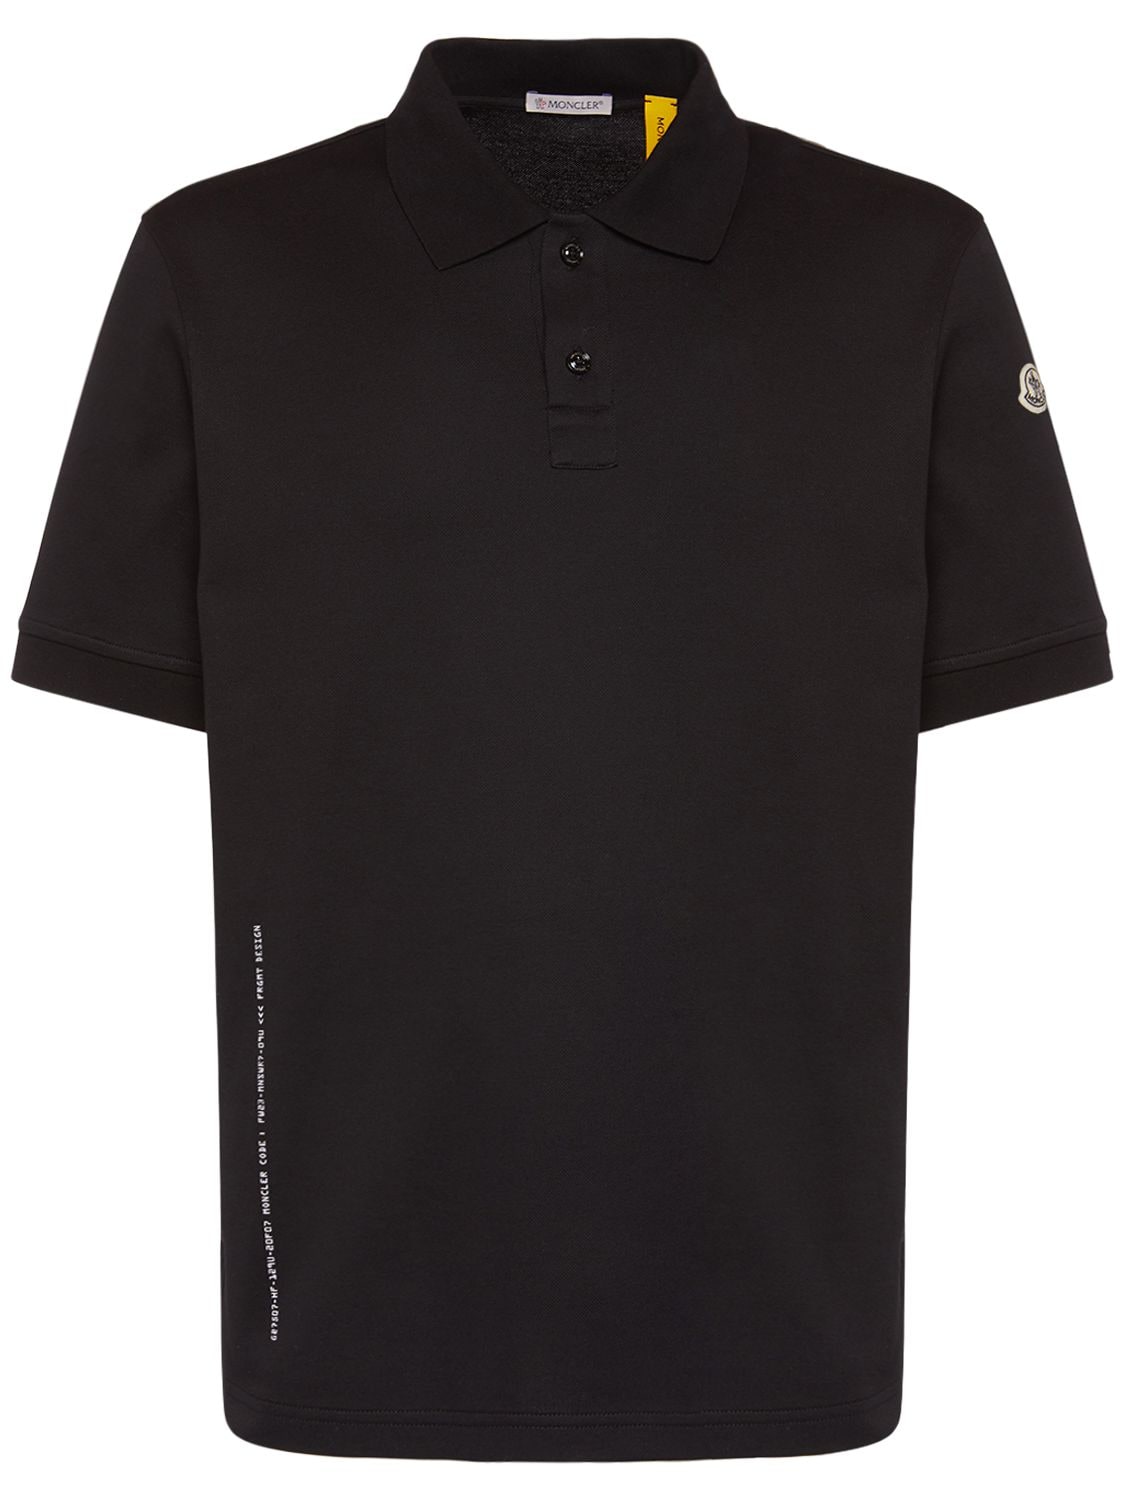 Moncler Genius Moncler X Frgmt Cotton Piqué Polo Shirt In Black